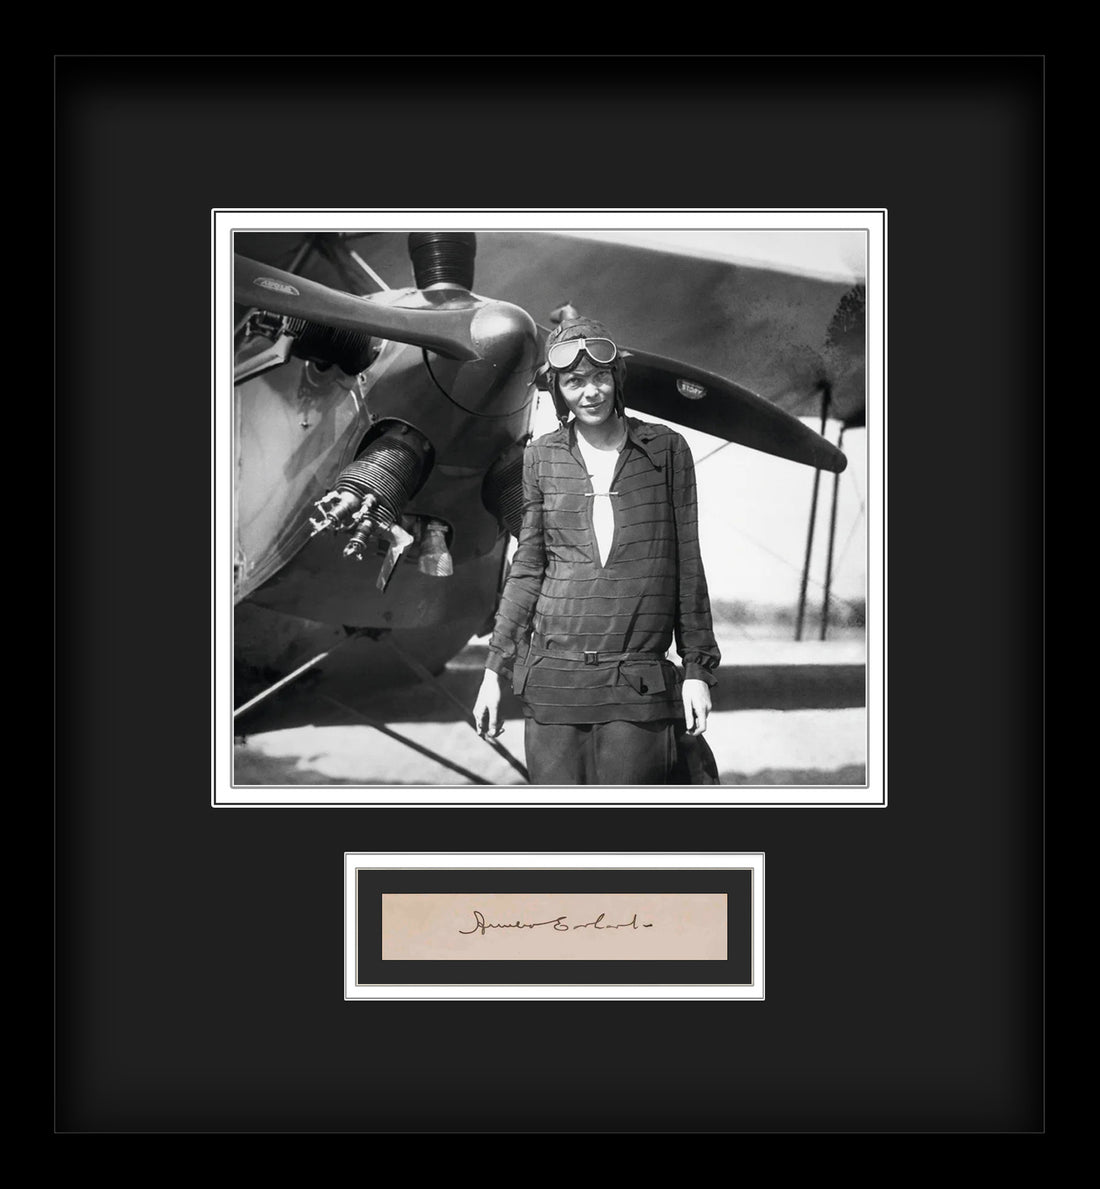 Amelia Earhart Signed Autograph Display. Auto JSA